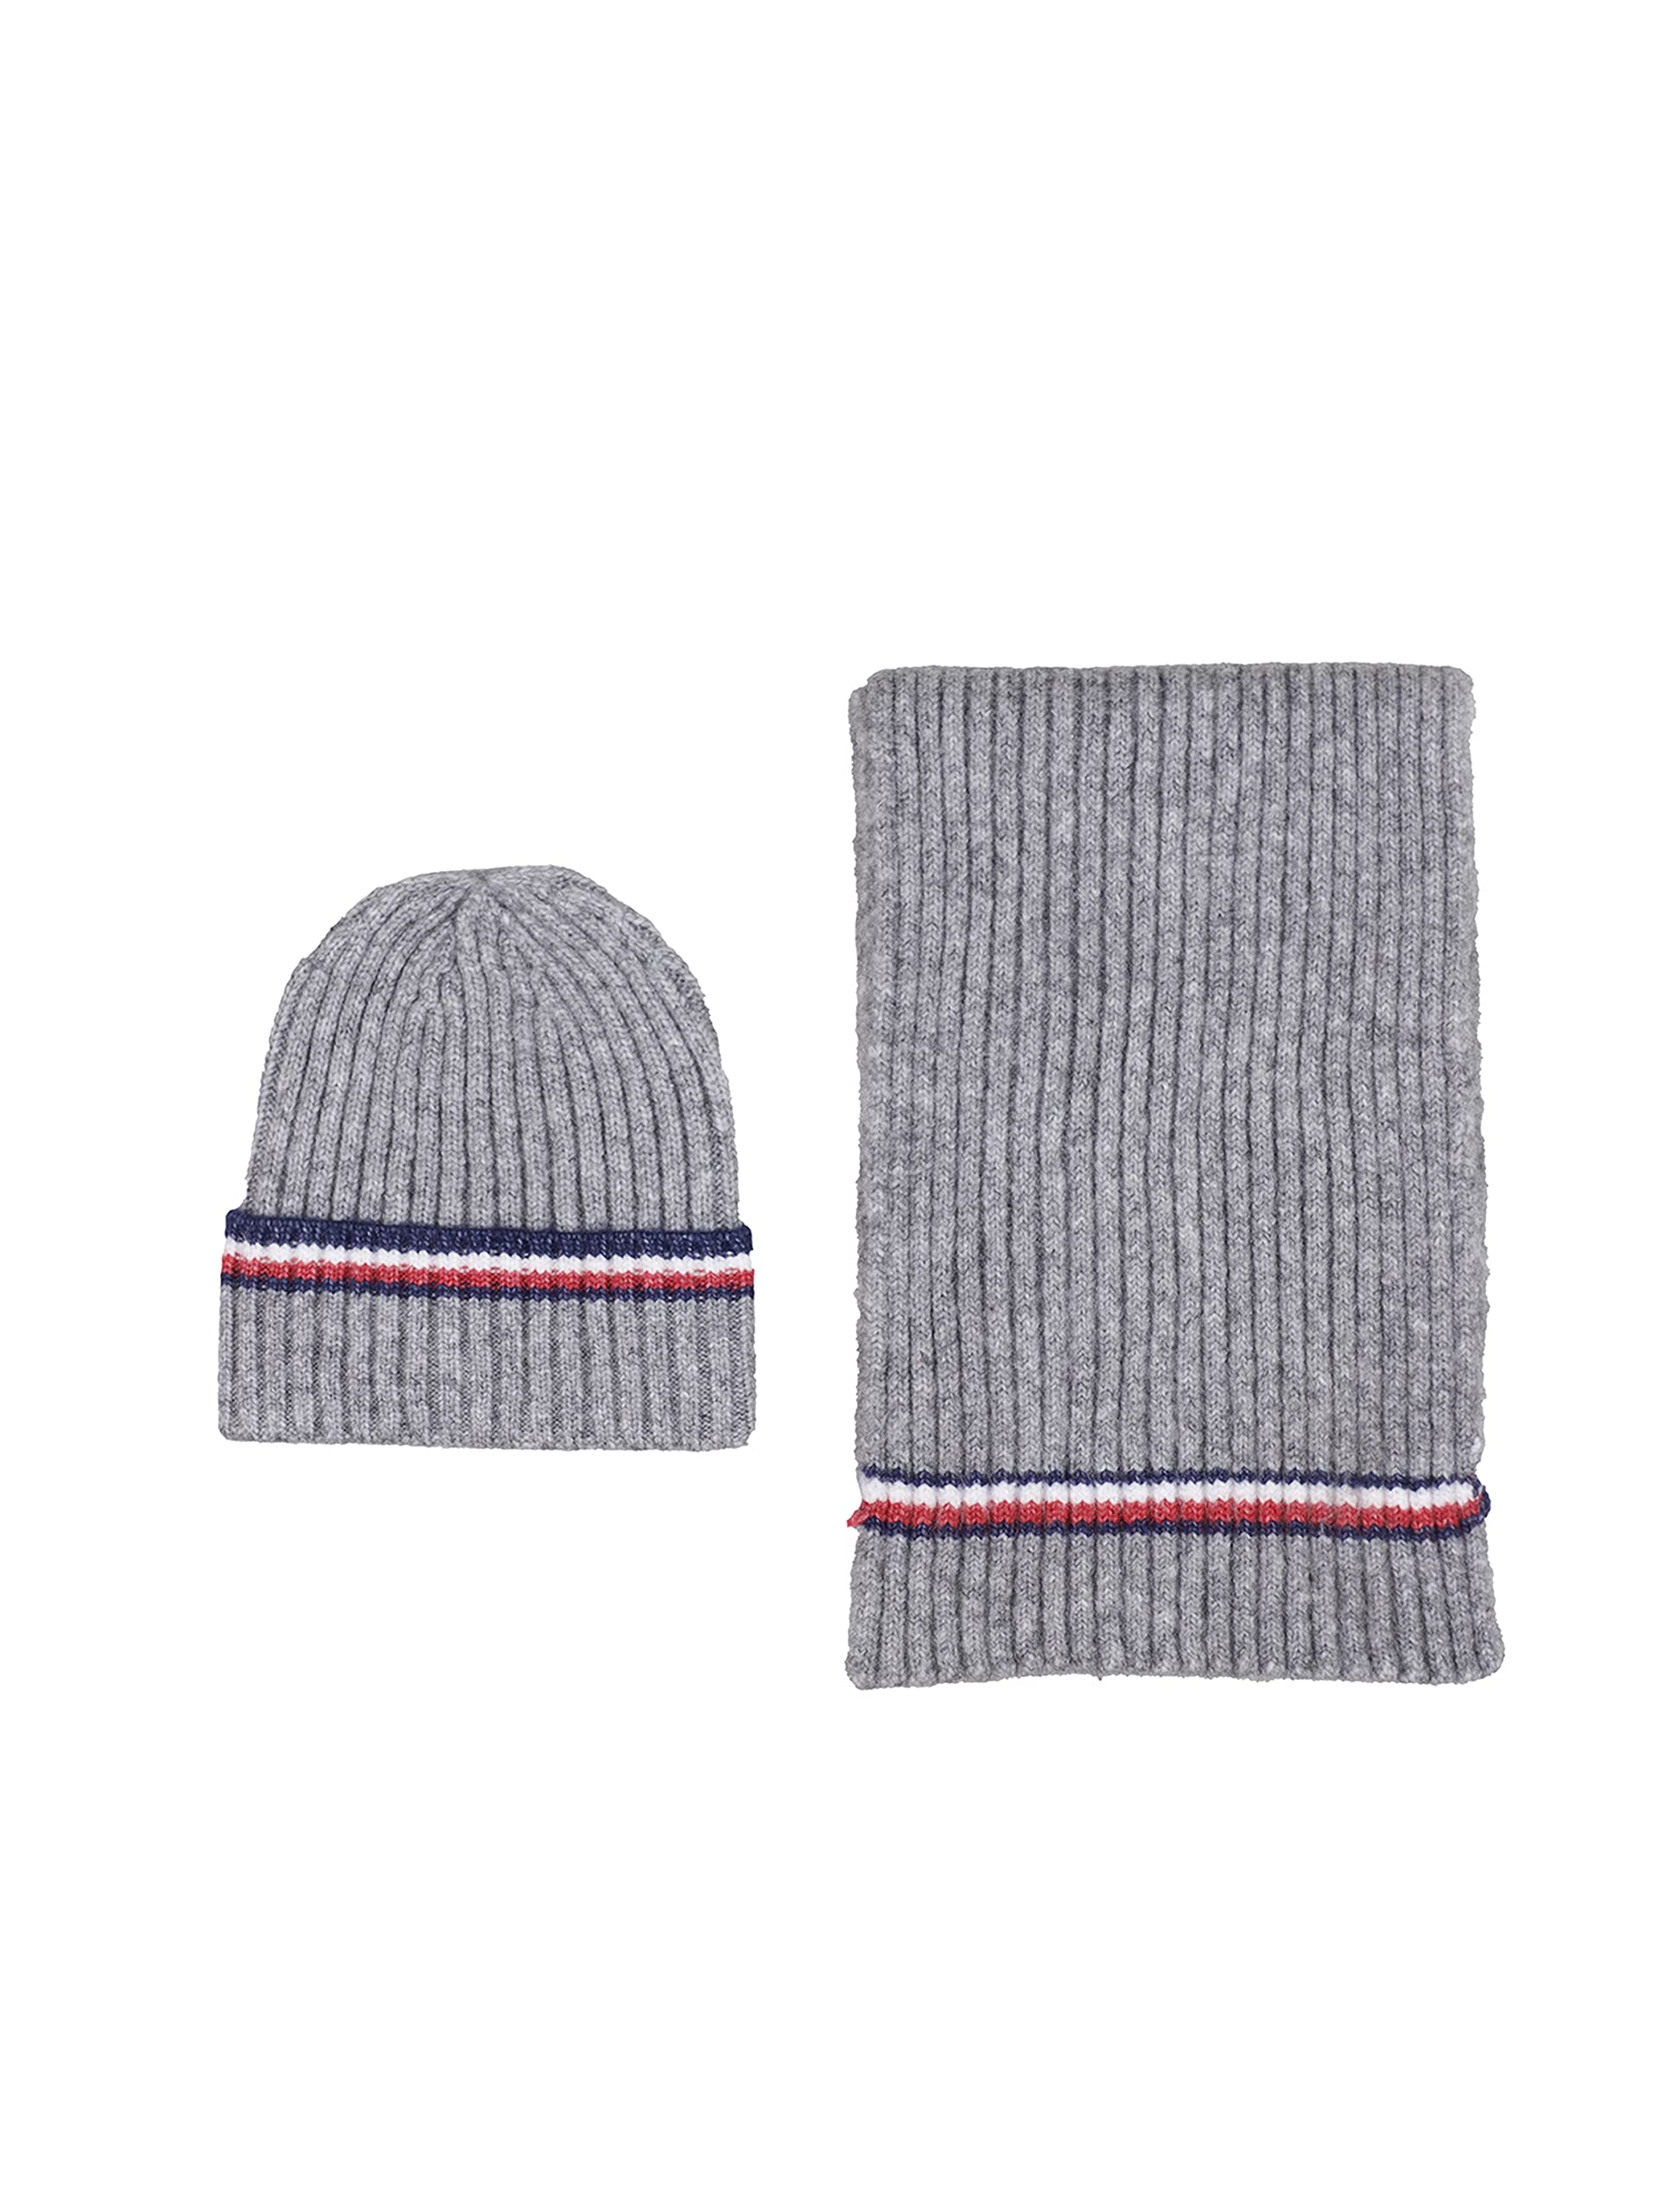 Tommy Hilfiger Men's Scarf + Hat Cold Weather Accessories Gift Set $12.10 +FS w/Prime